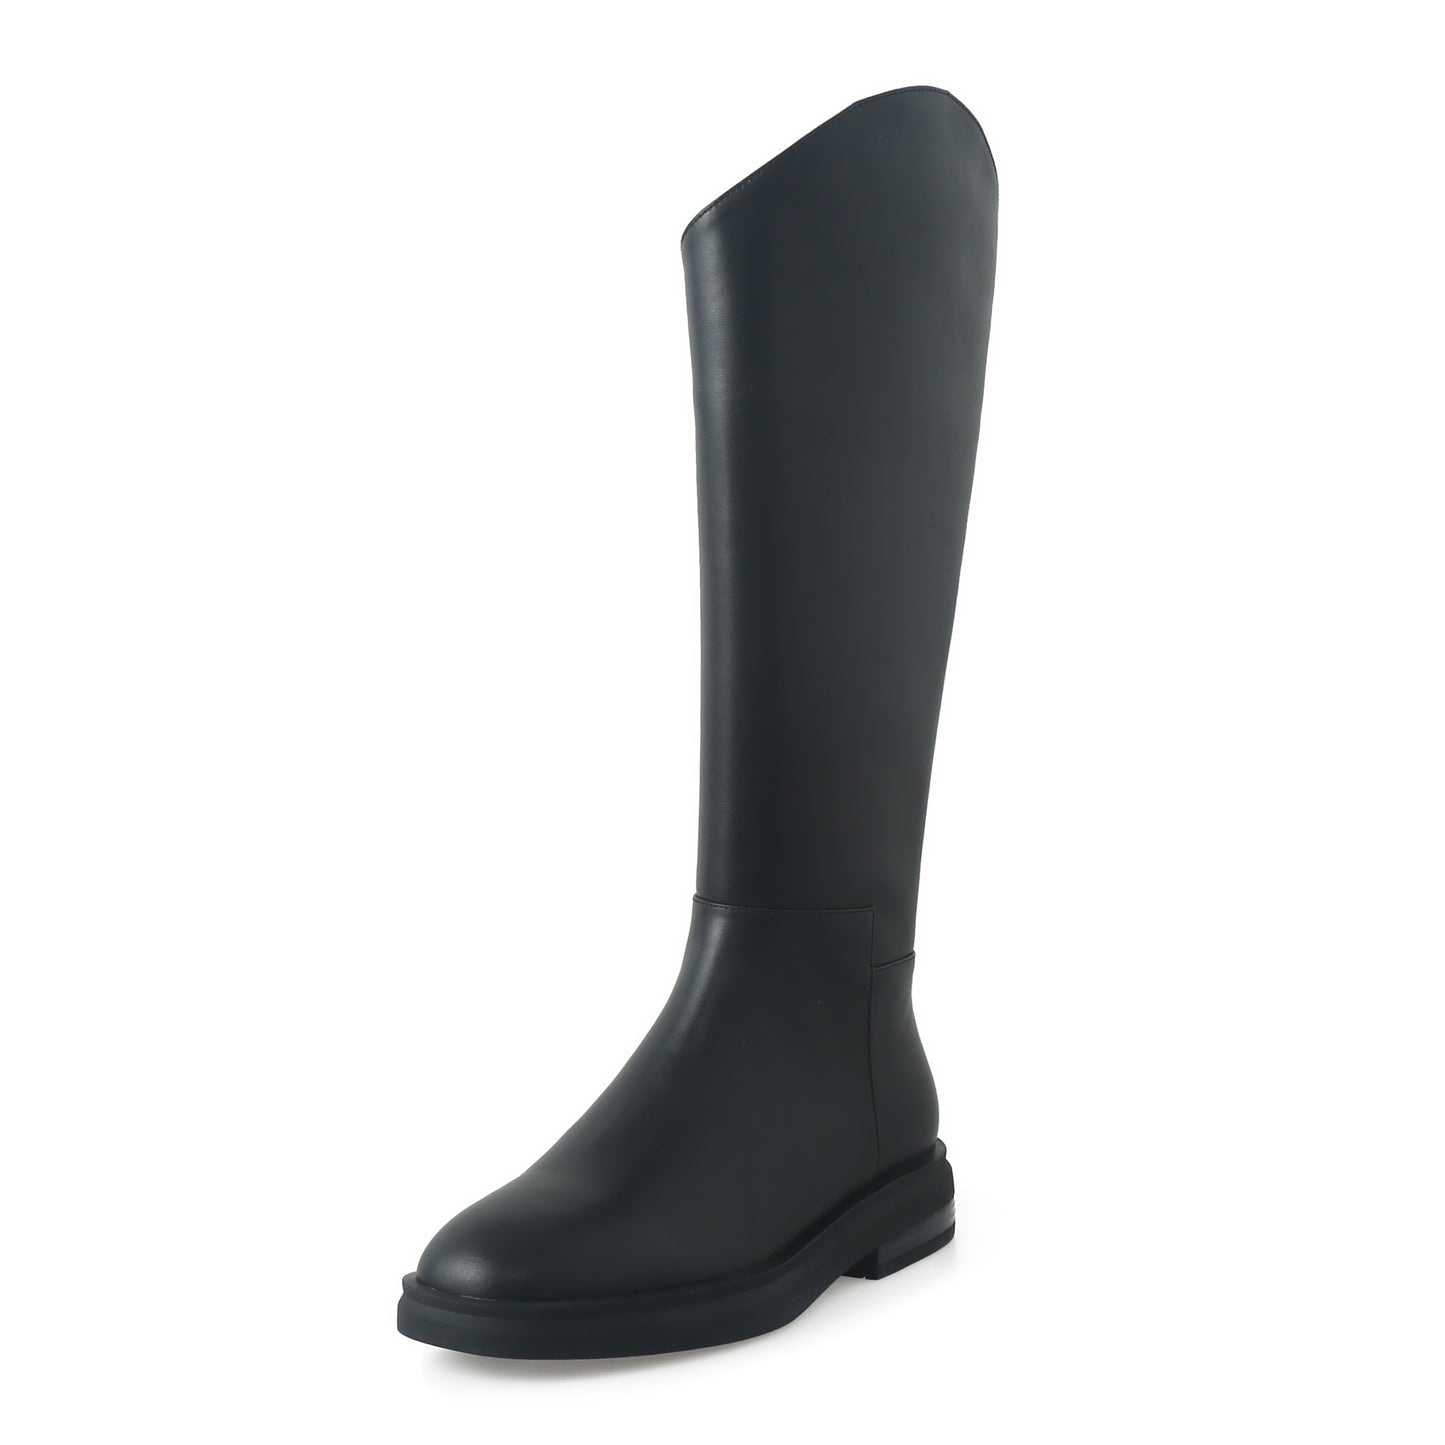 TinaCus Women's Genuine Leather Handmade Round Toe Block Heel Side Zip Up Stylish Knee-High Boots